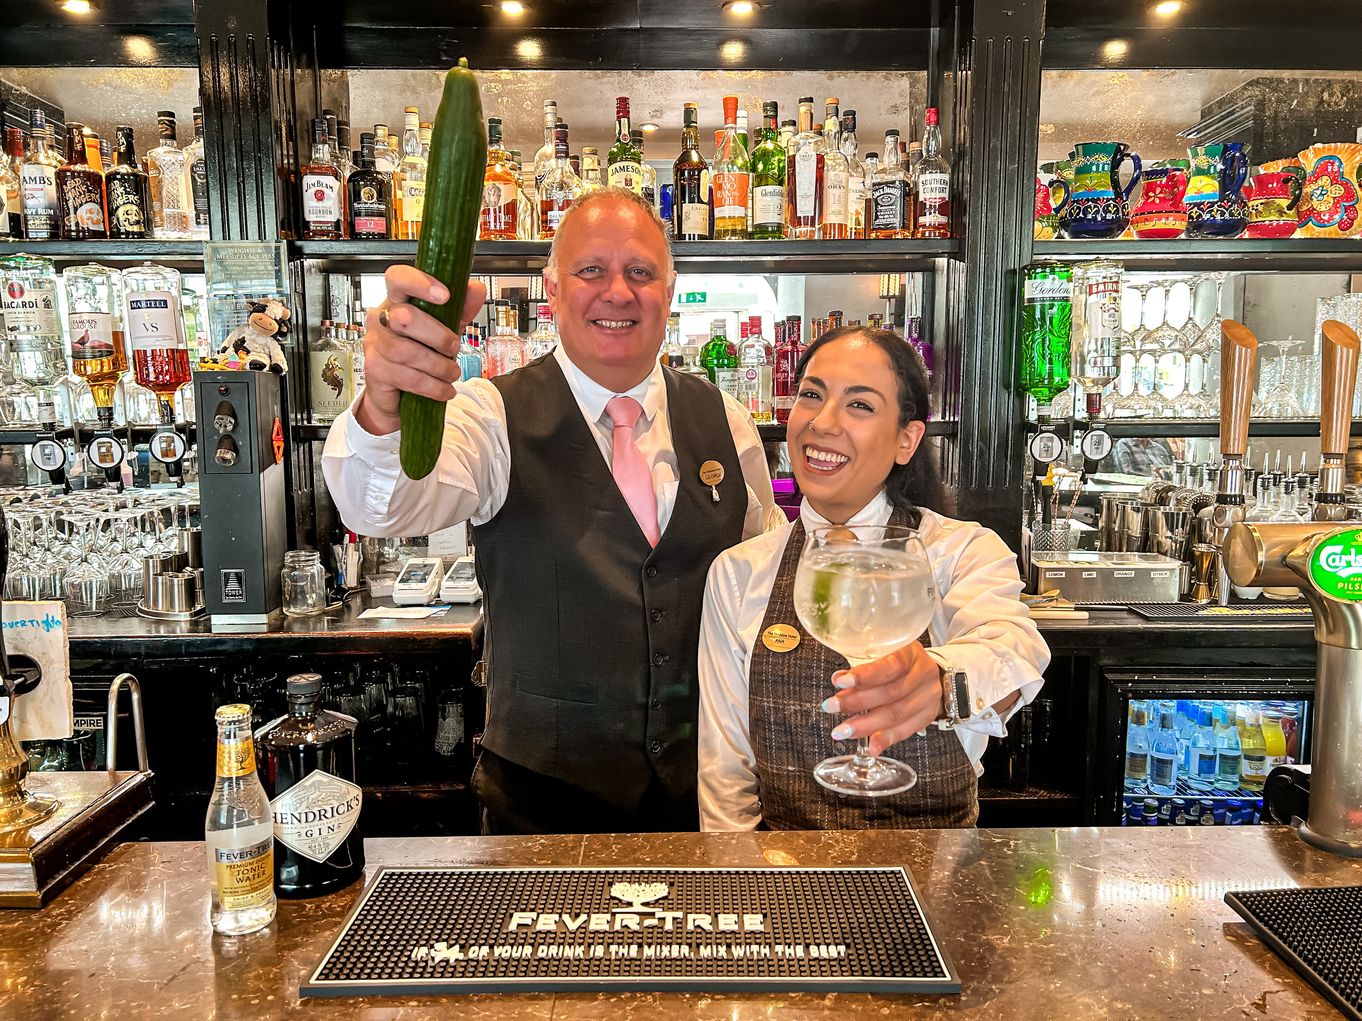 Skiddaw Hotel bar staff celebrating with a Hendricks Gin & Fever-Tree tonic